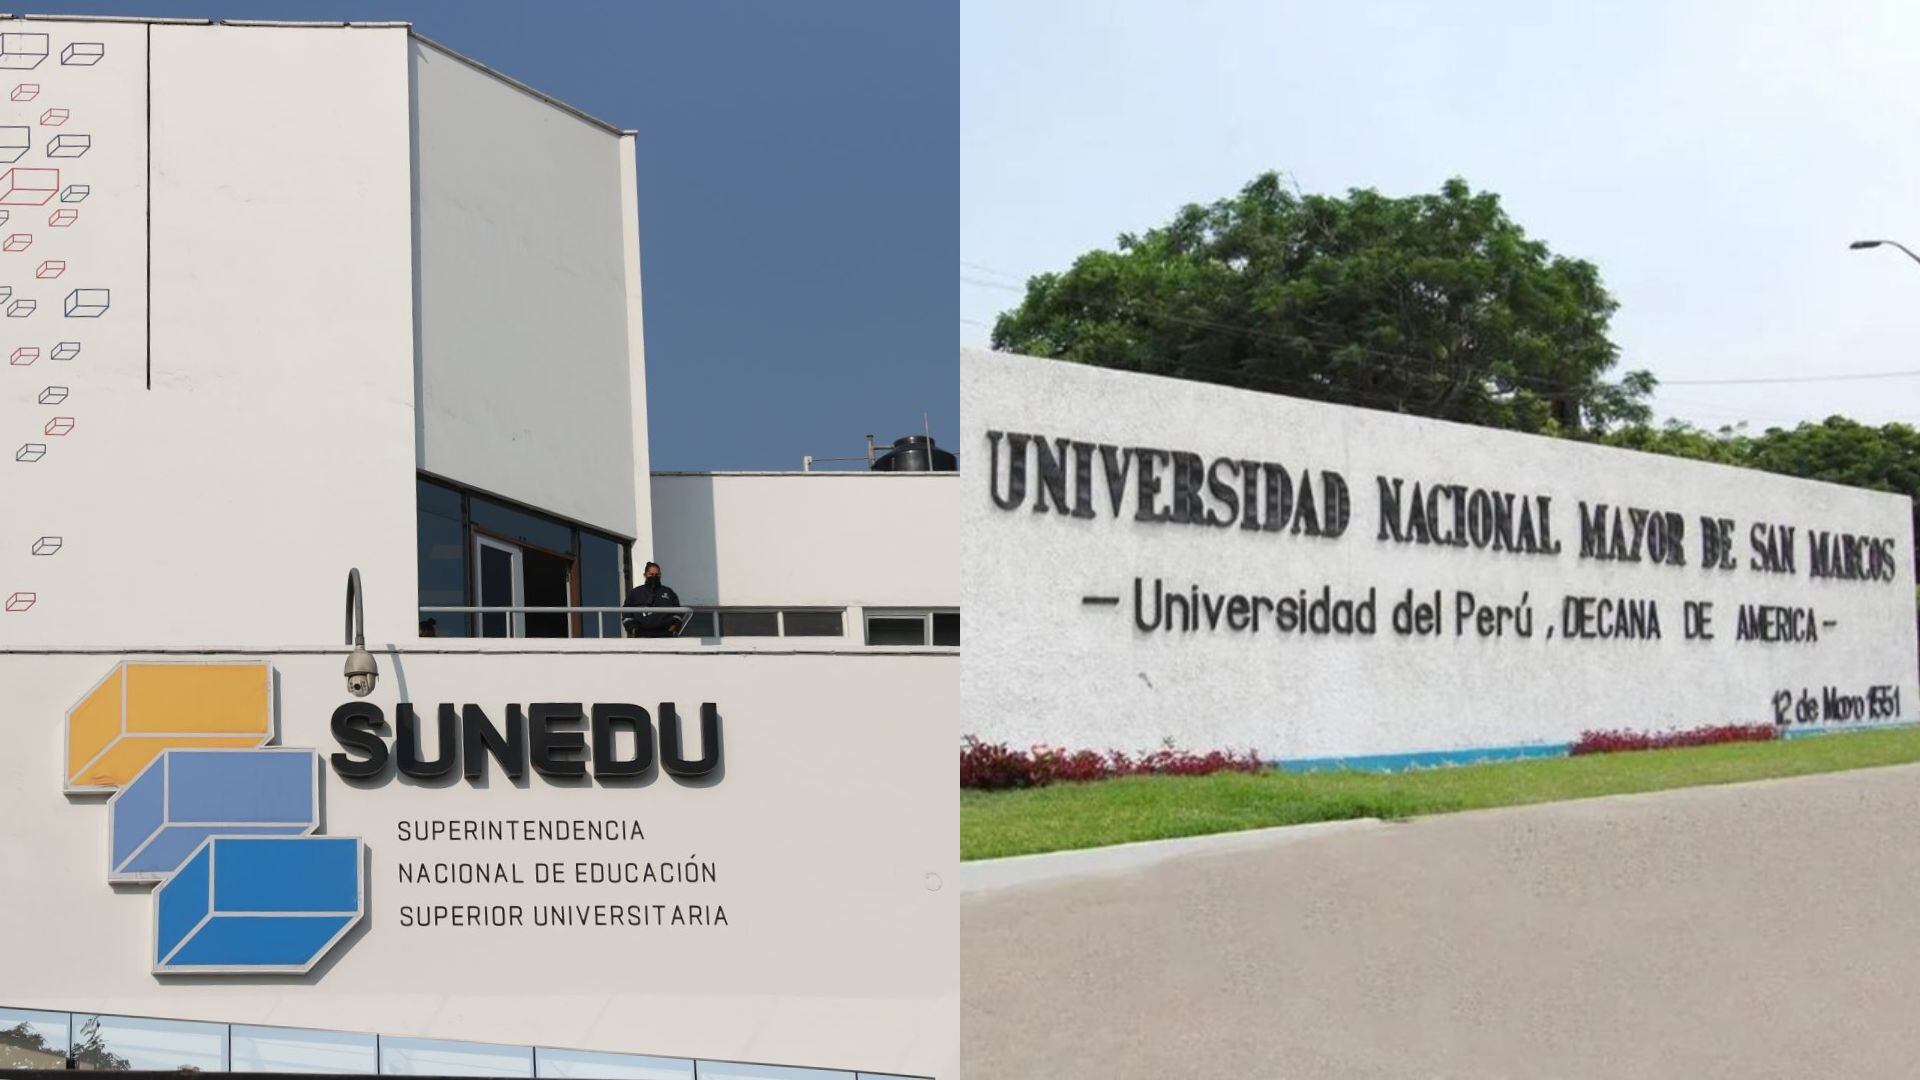 Sunedu - Universidad San Marcos